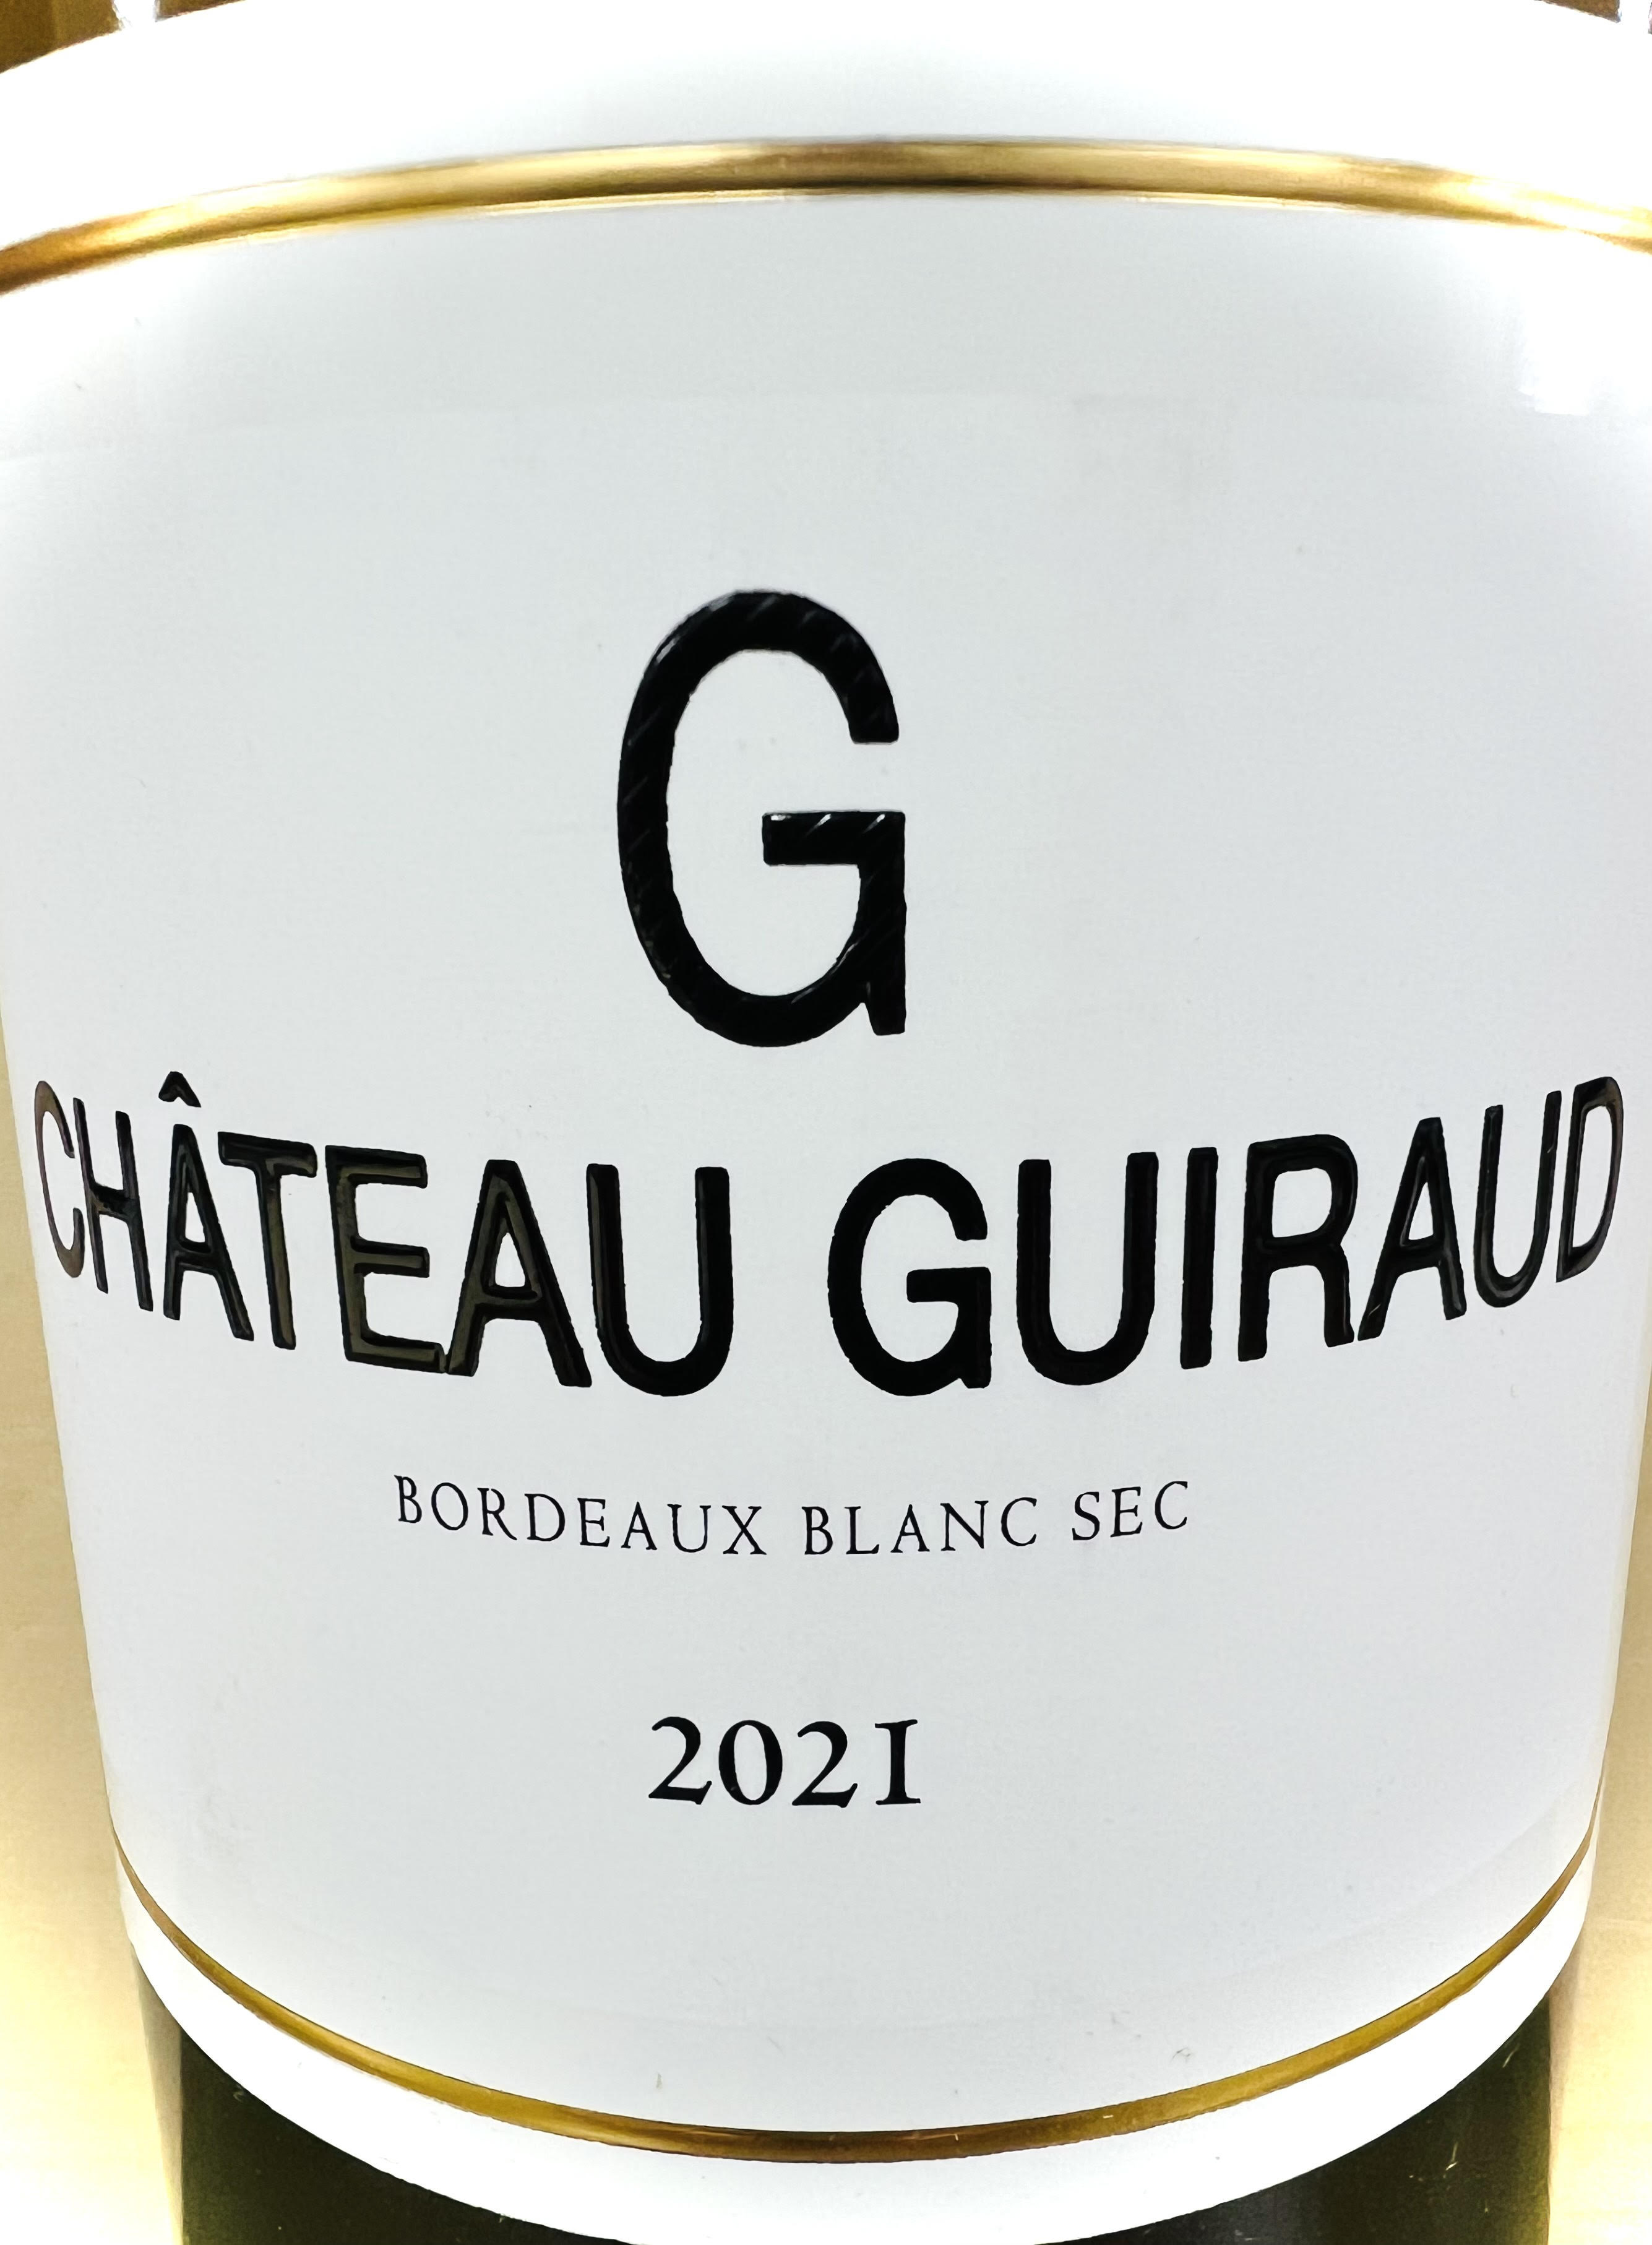 Chateau Guiraud "G" Bordeaux Blanc Sec 2021